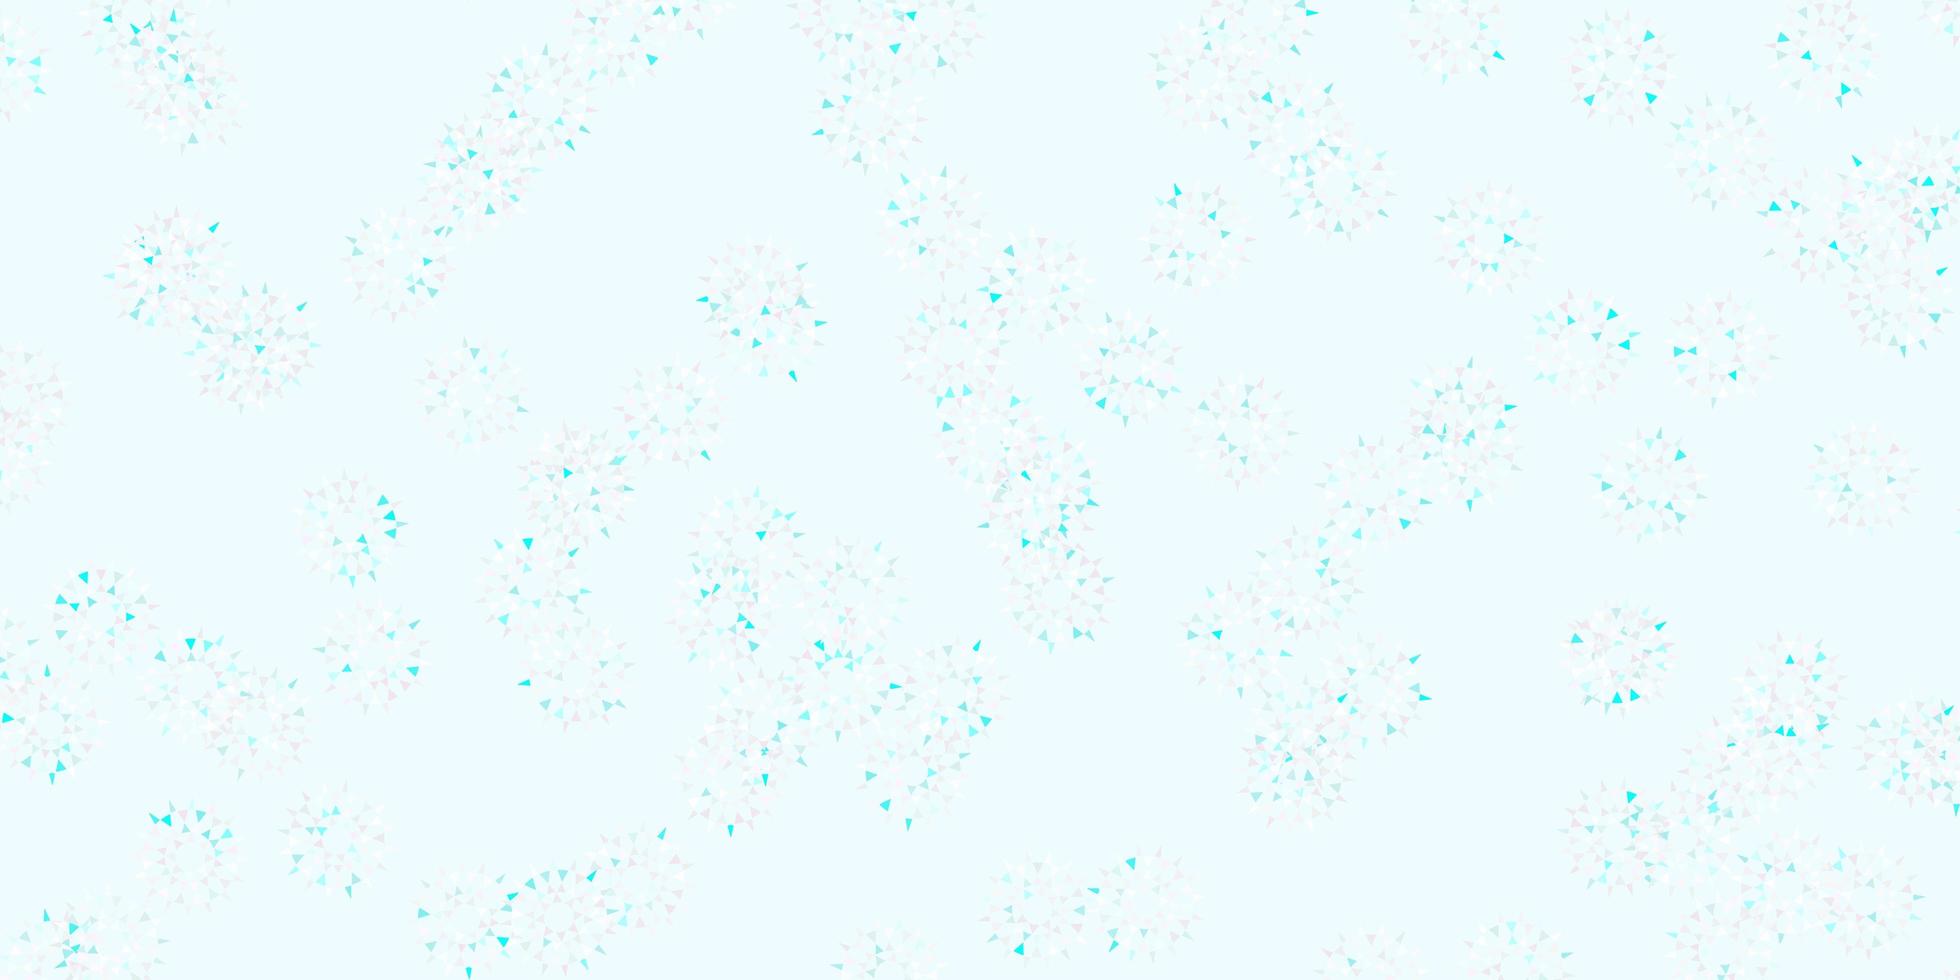 ljusrosa, blå vektor doodle bakgrund med blommor.